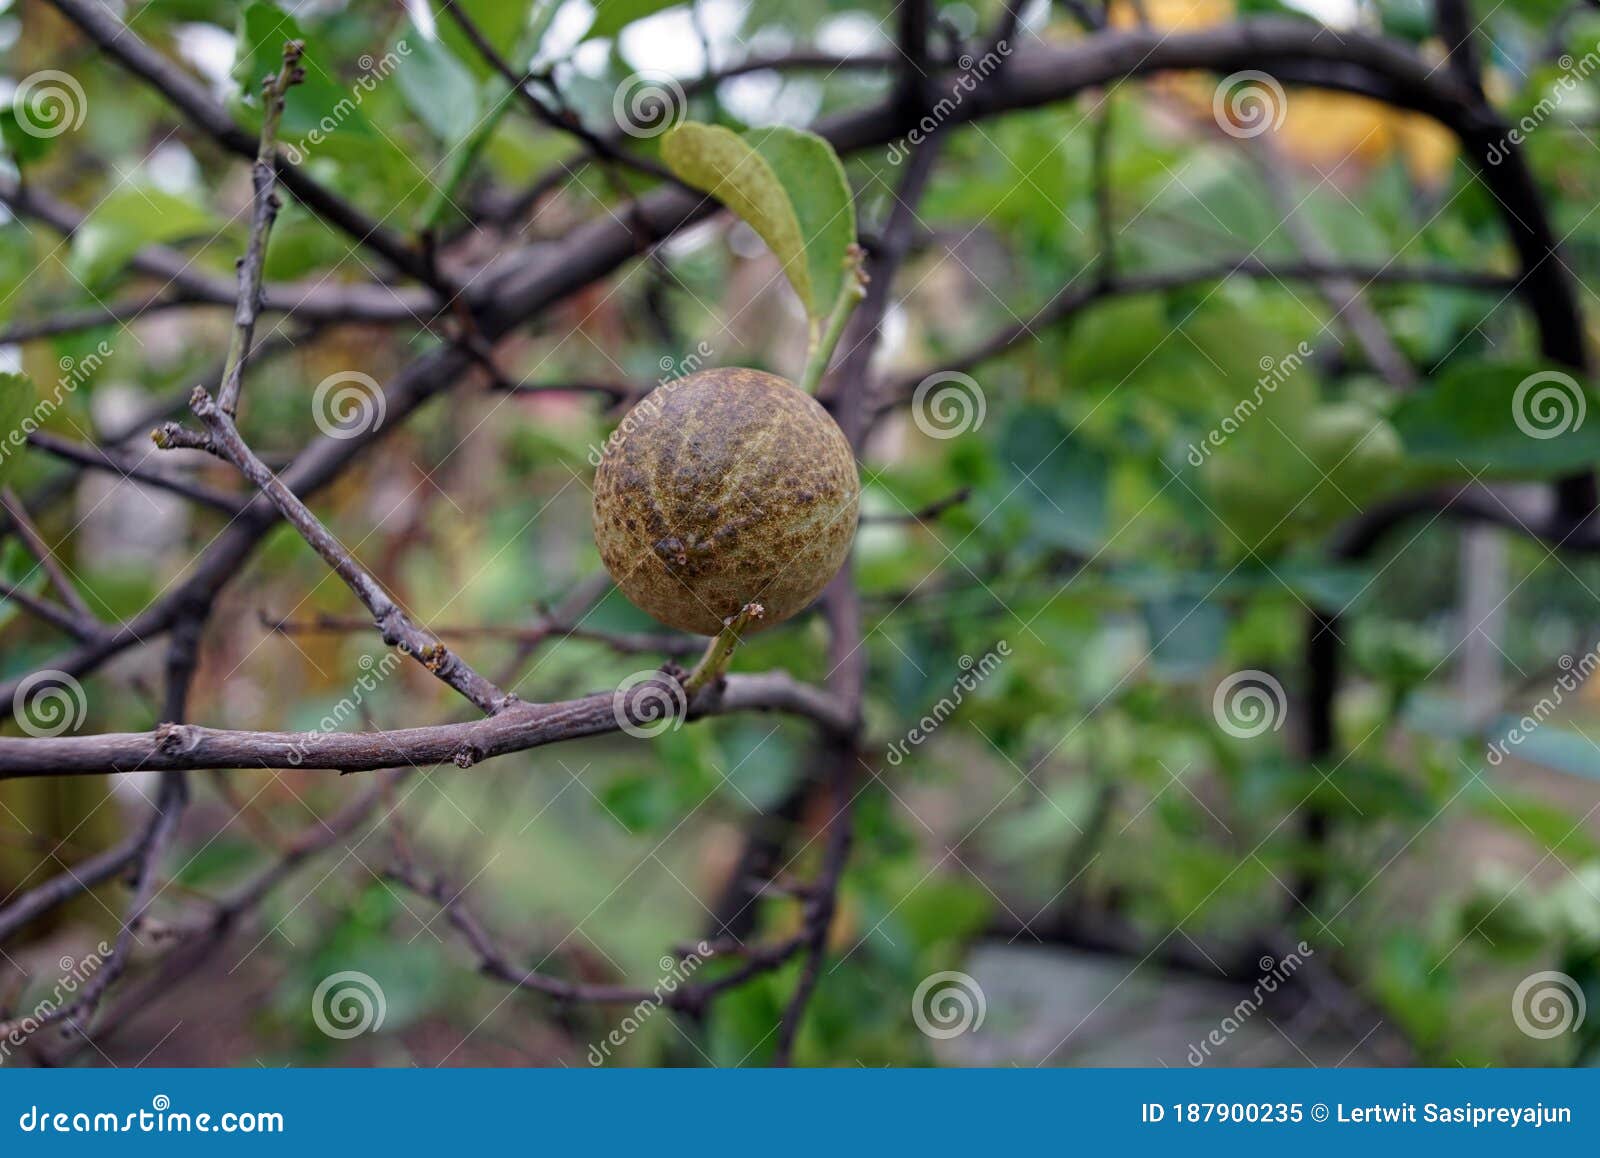 citrus rust mite infestation on lme fruit